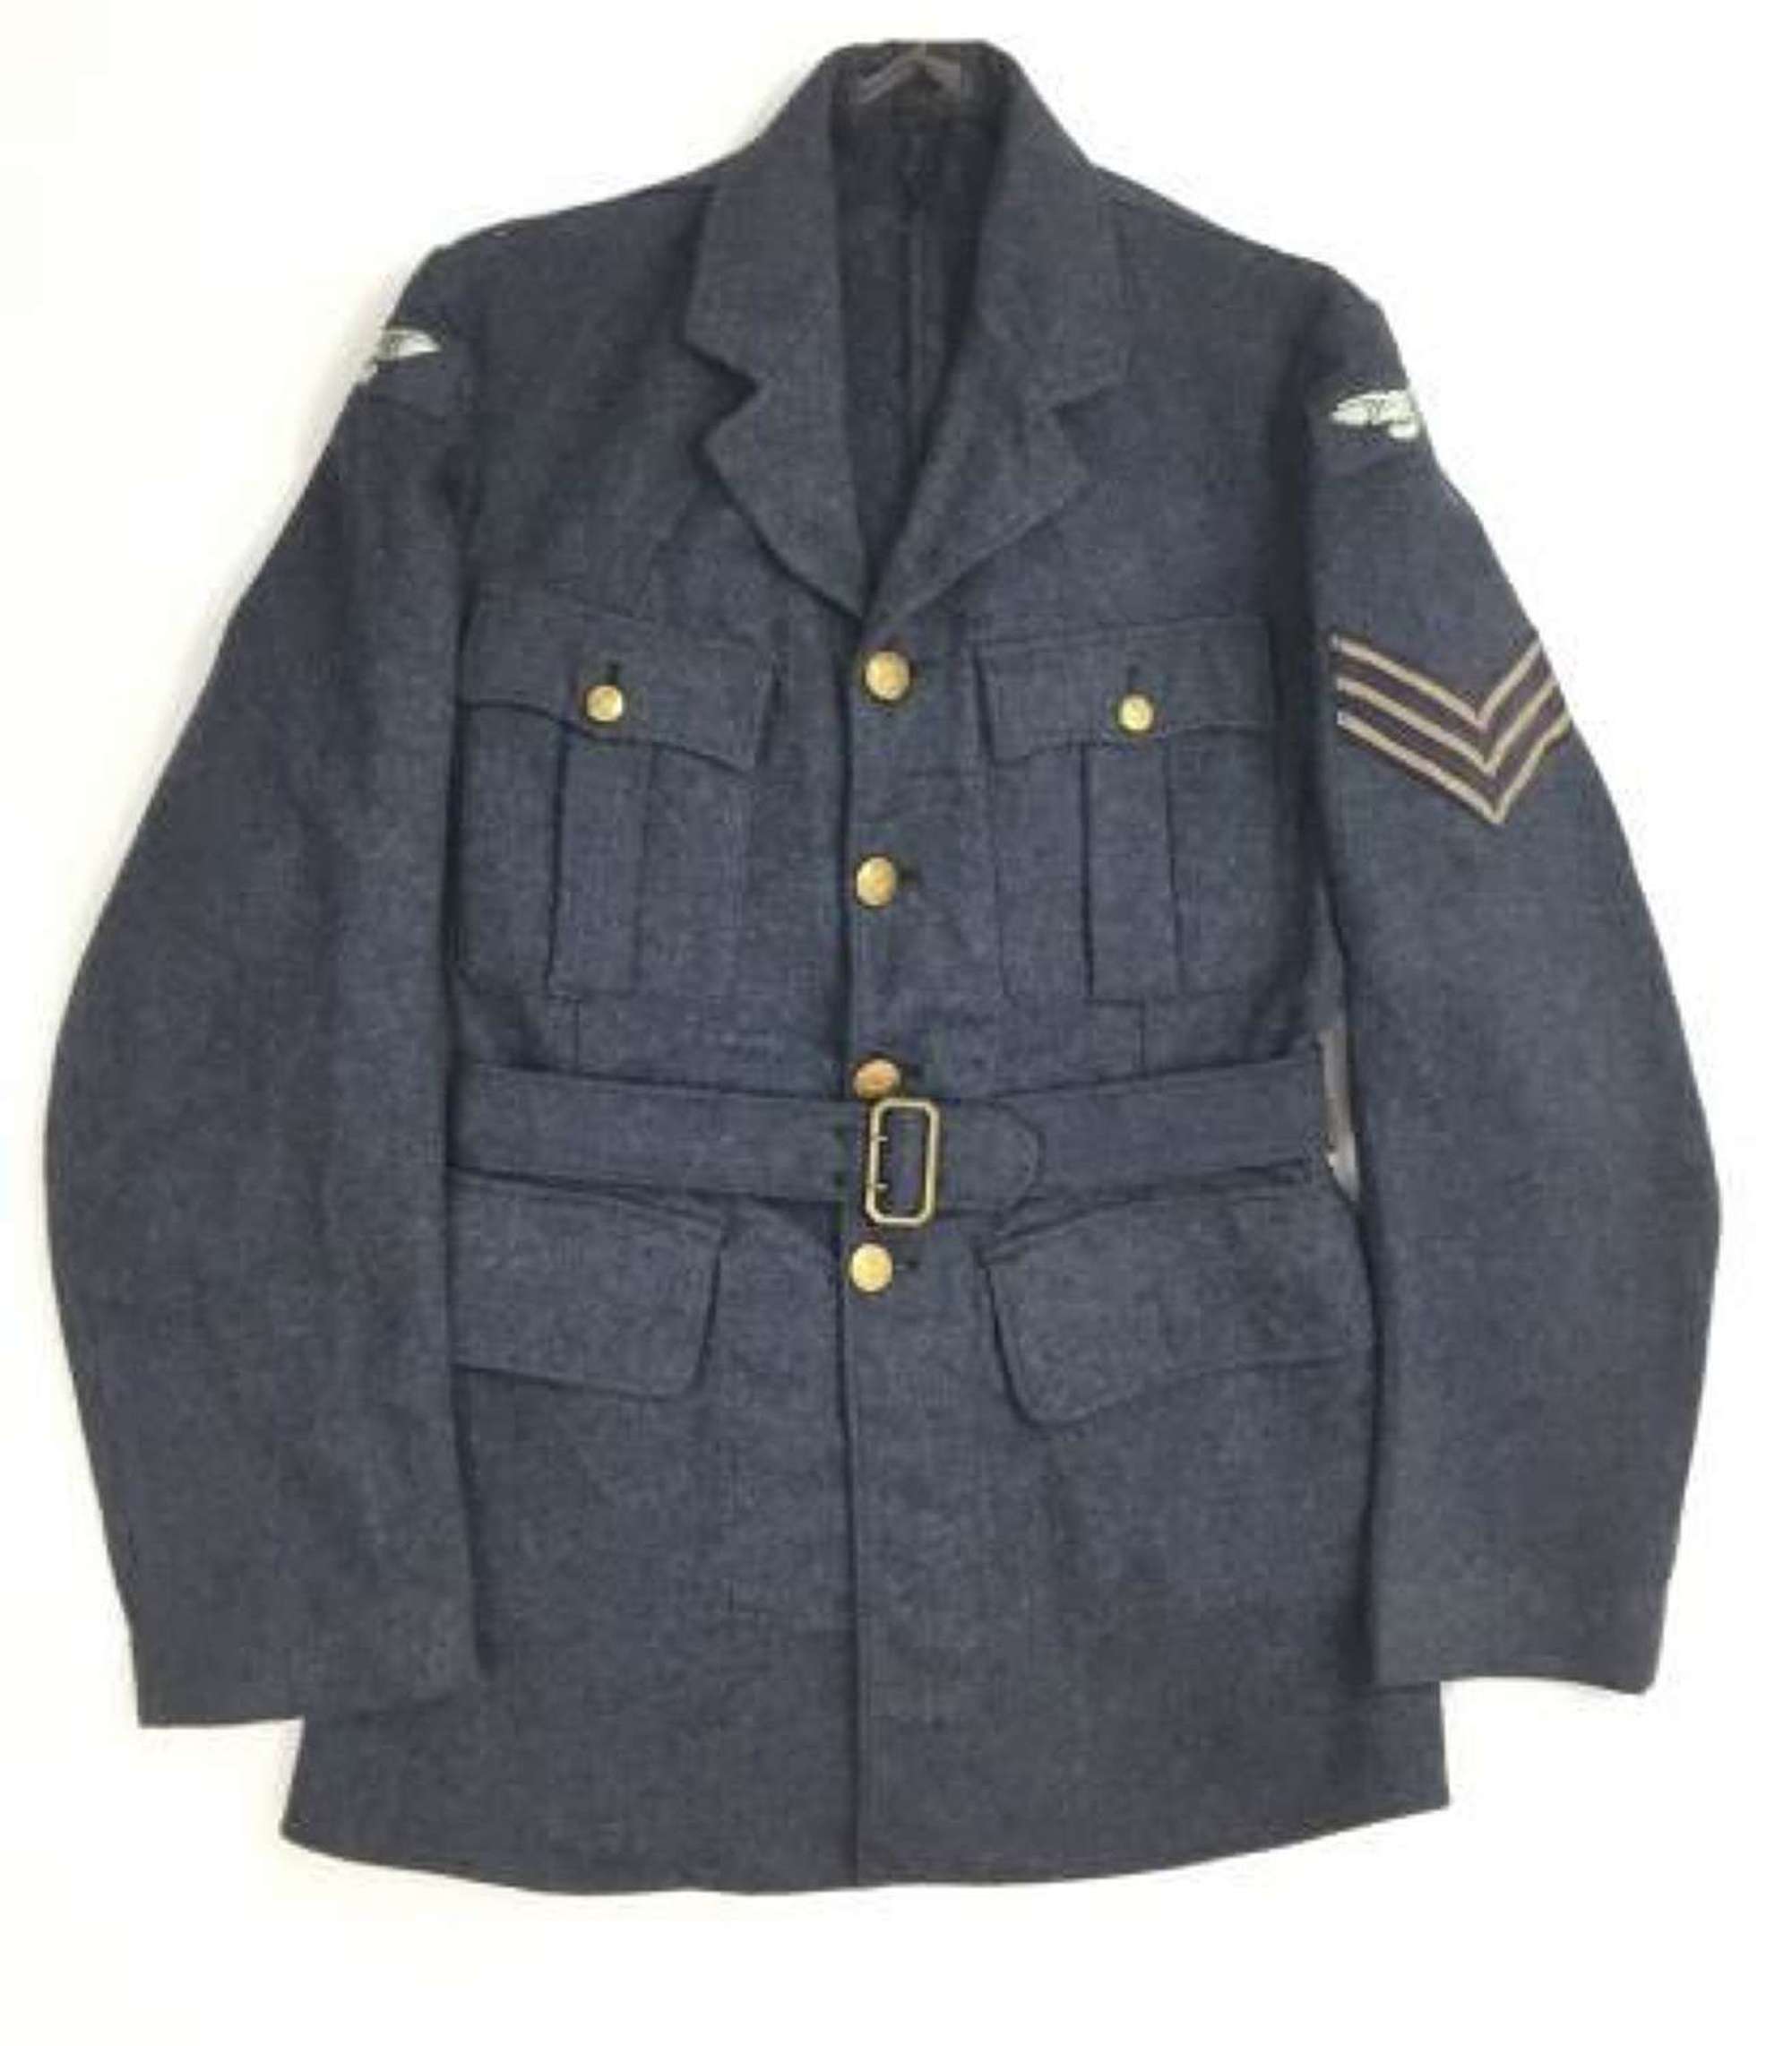 Original 1945 Dated RAF OA Tunic - Size 16